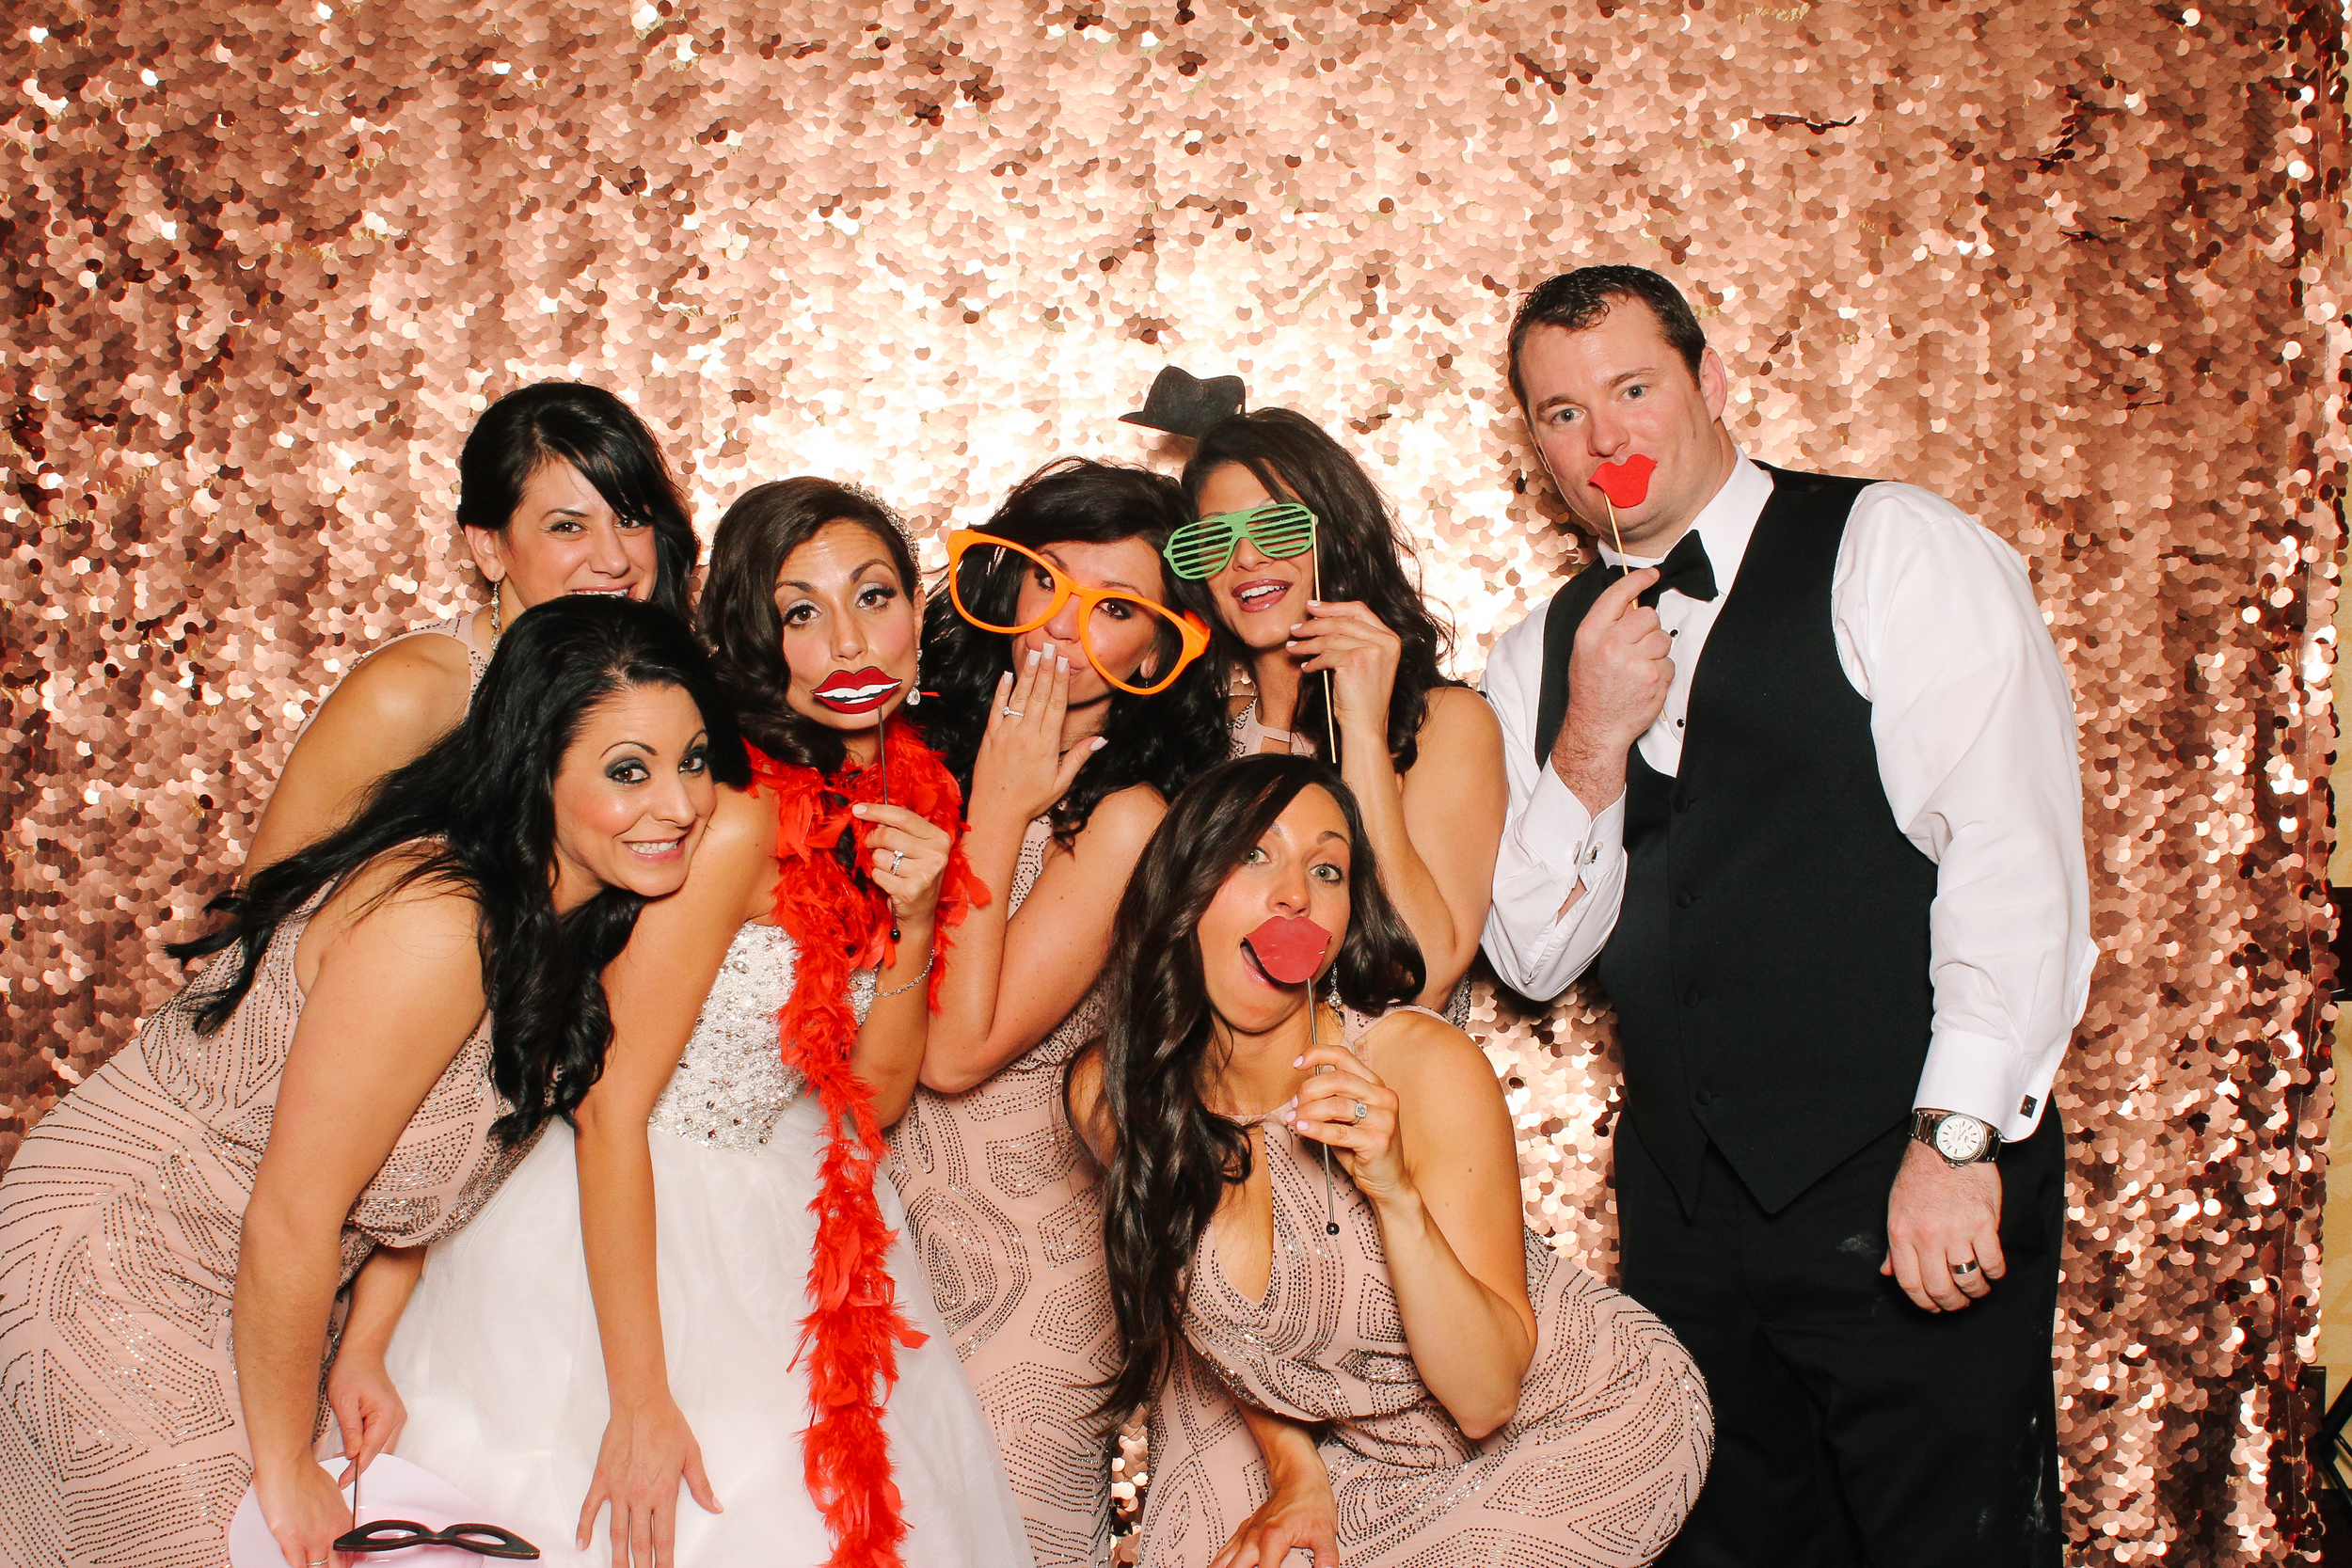 00118-Marriot Cleveland Hotel Wedding Photobooth-20141115.jpg